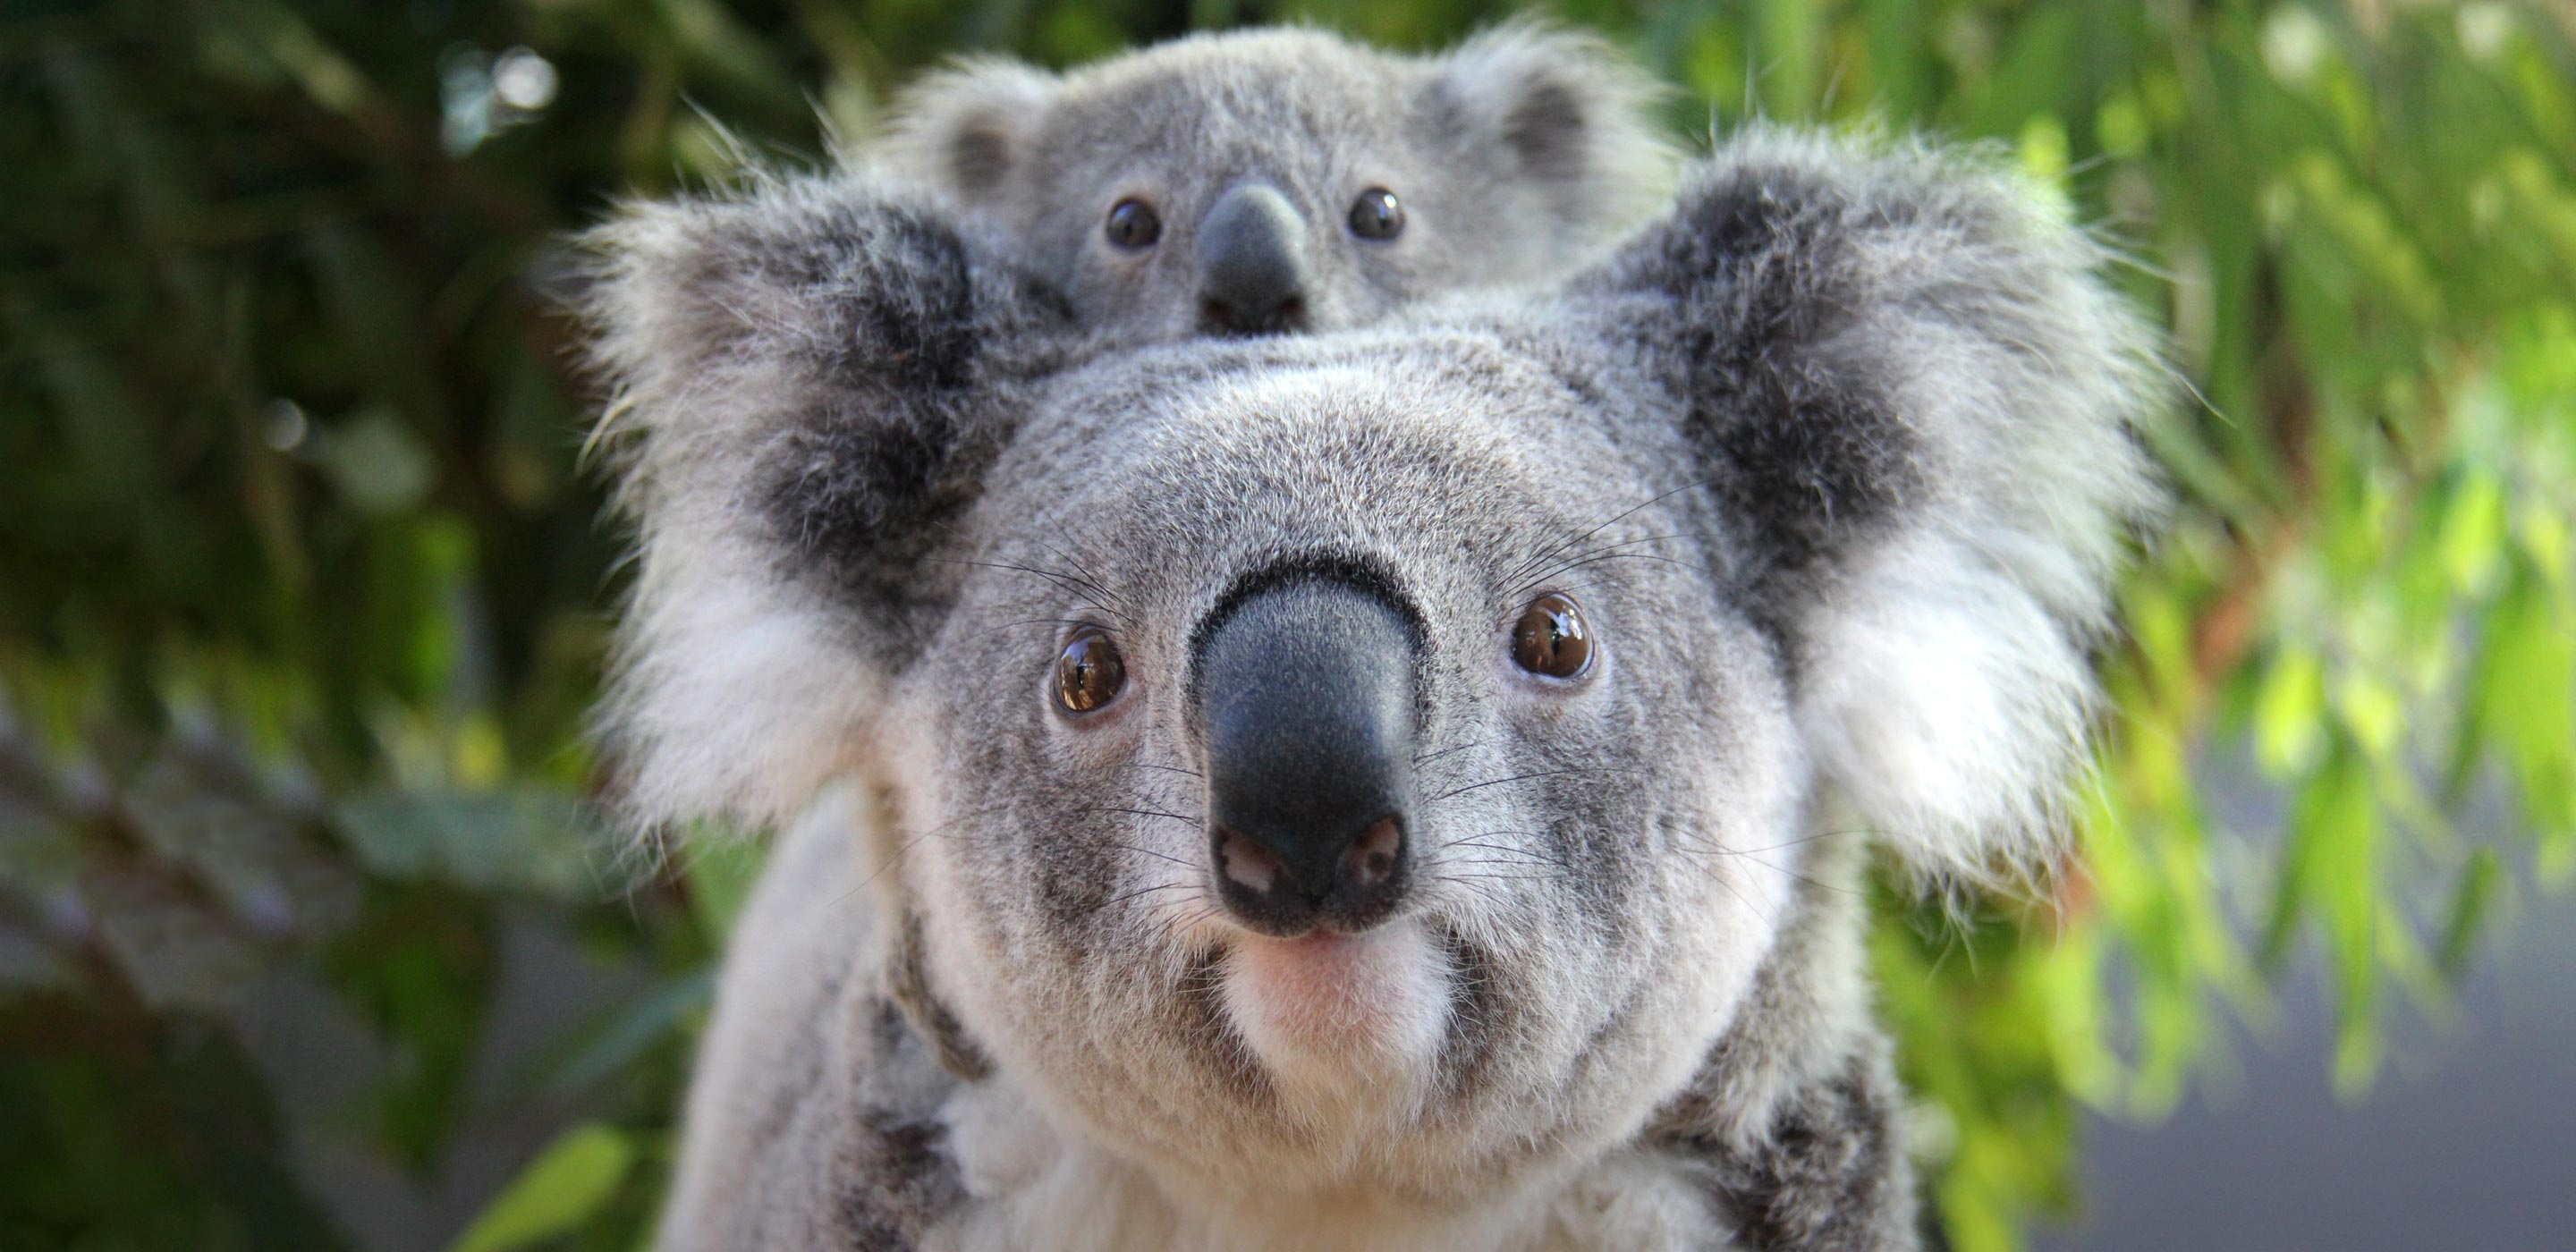 Koala encounter at Taronga, Unforgettable experience, Up-close koala meeting, Wildlife adventure, 2880x1400 Dual Screen Desktop